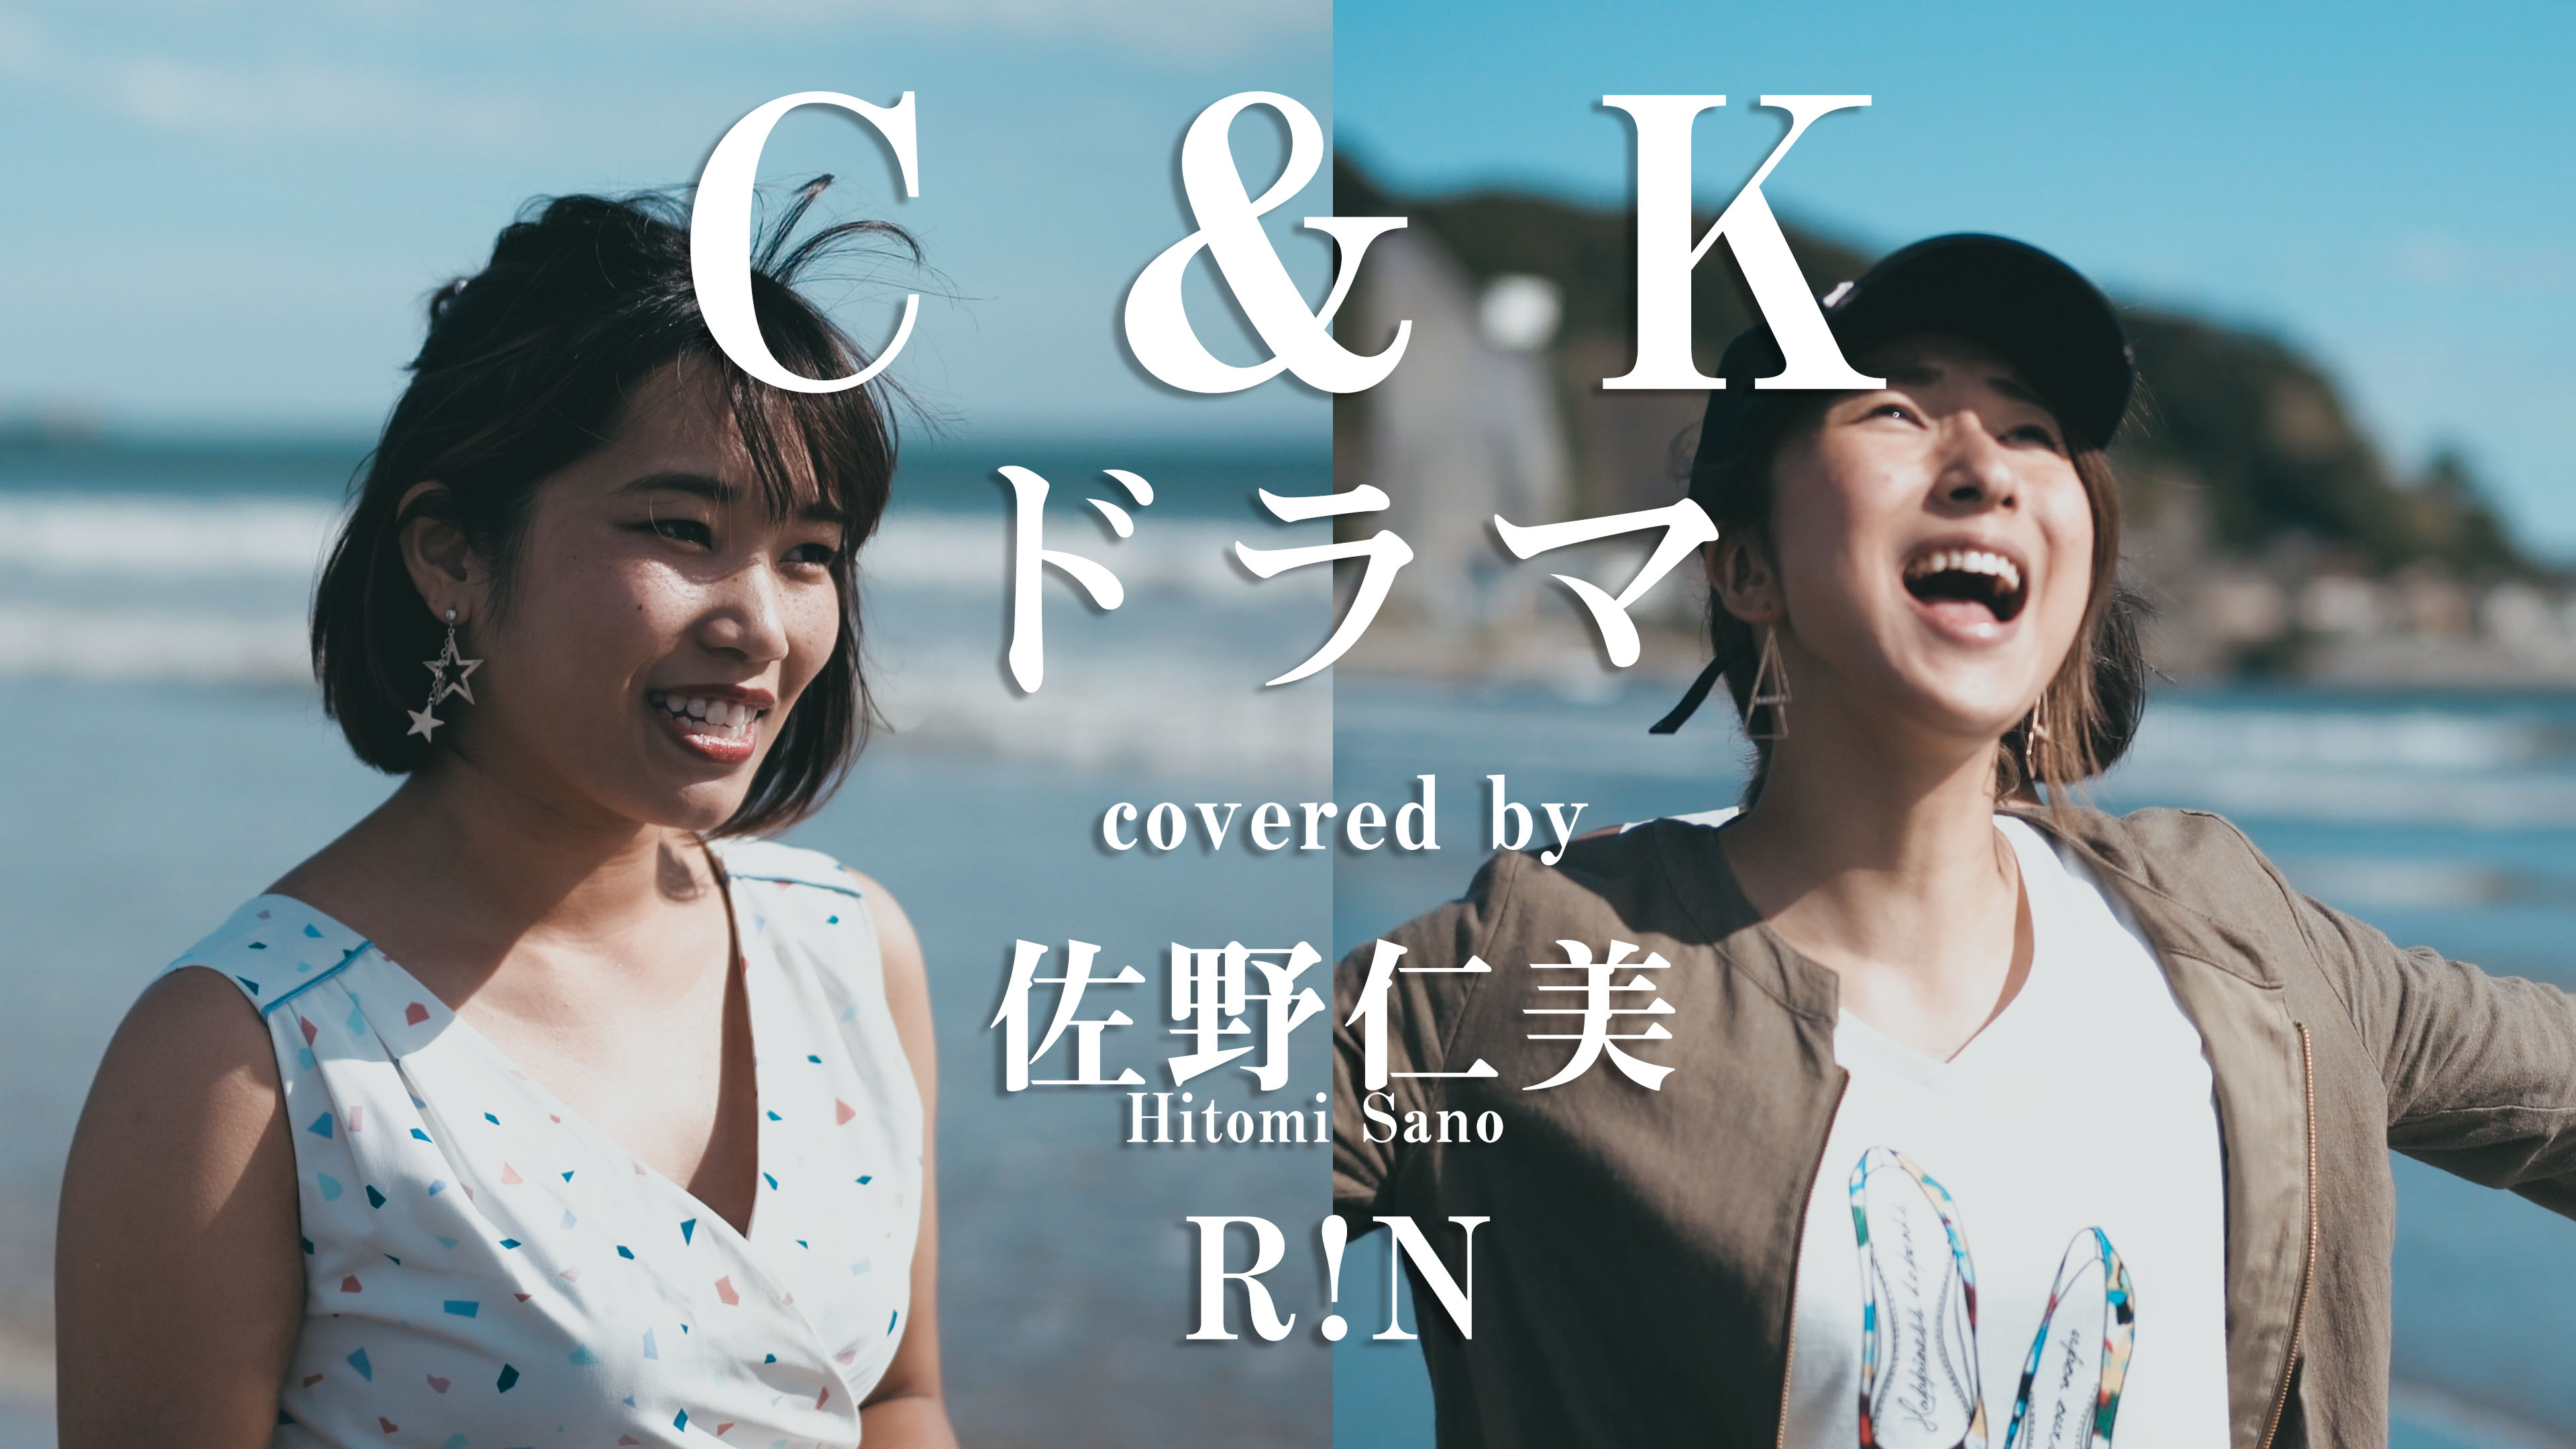 C&K ドラマ covered by 佐野仁美 & R!N